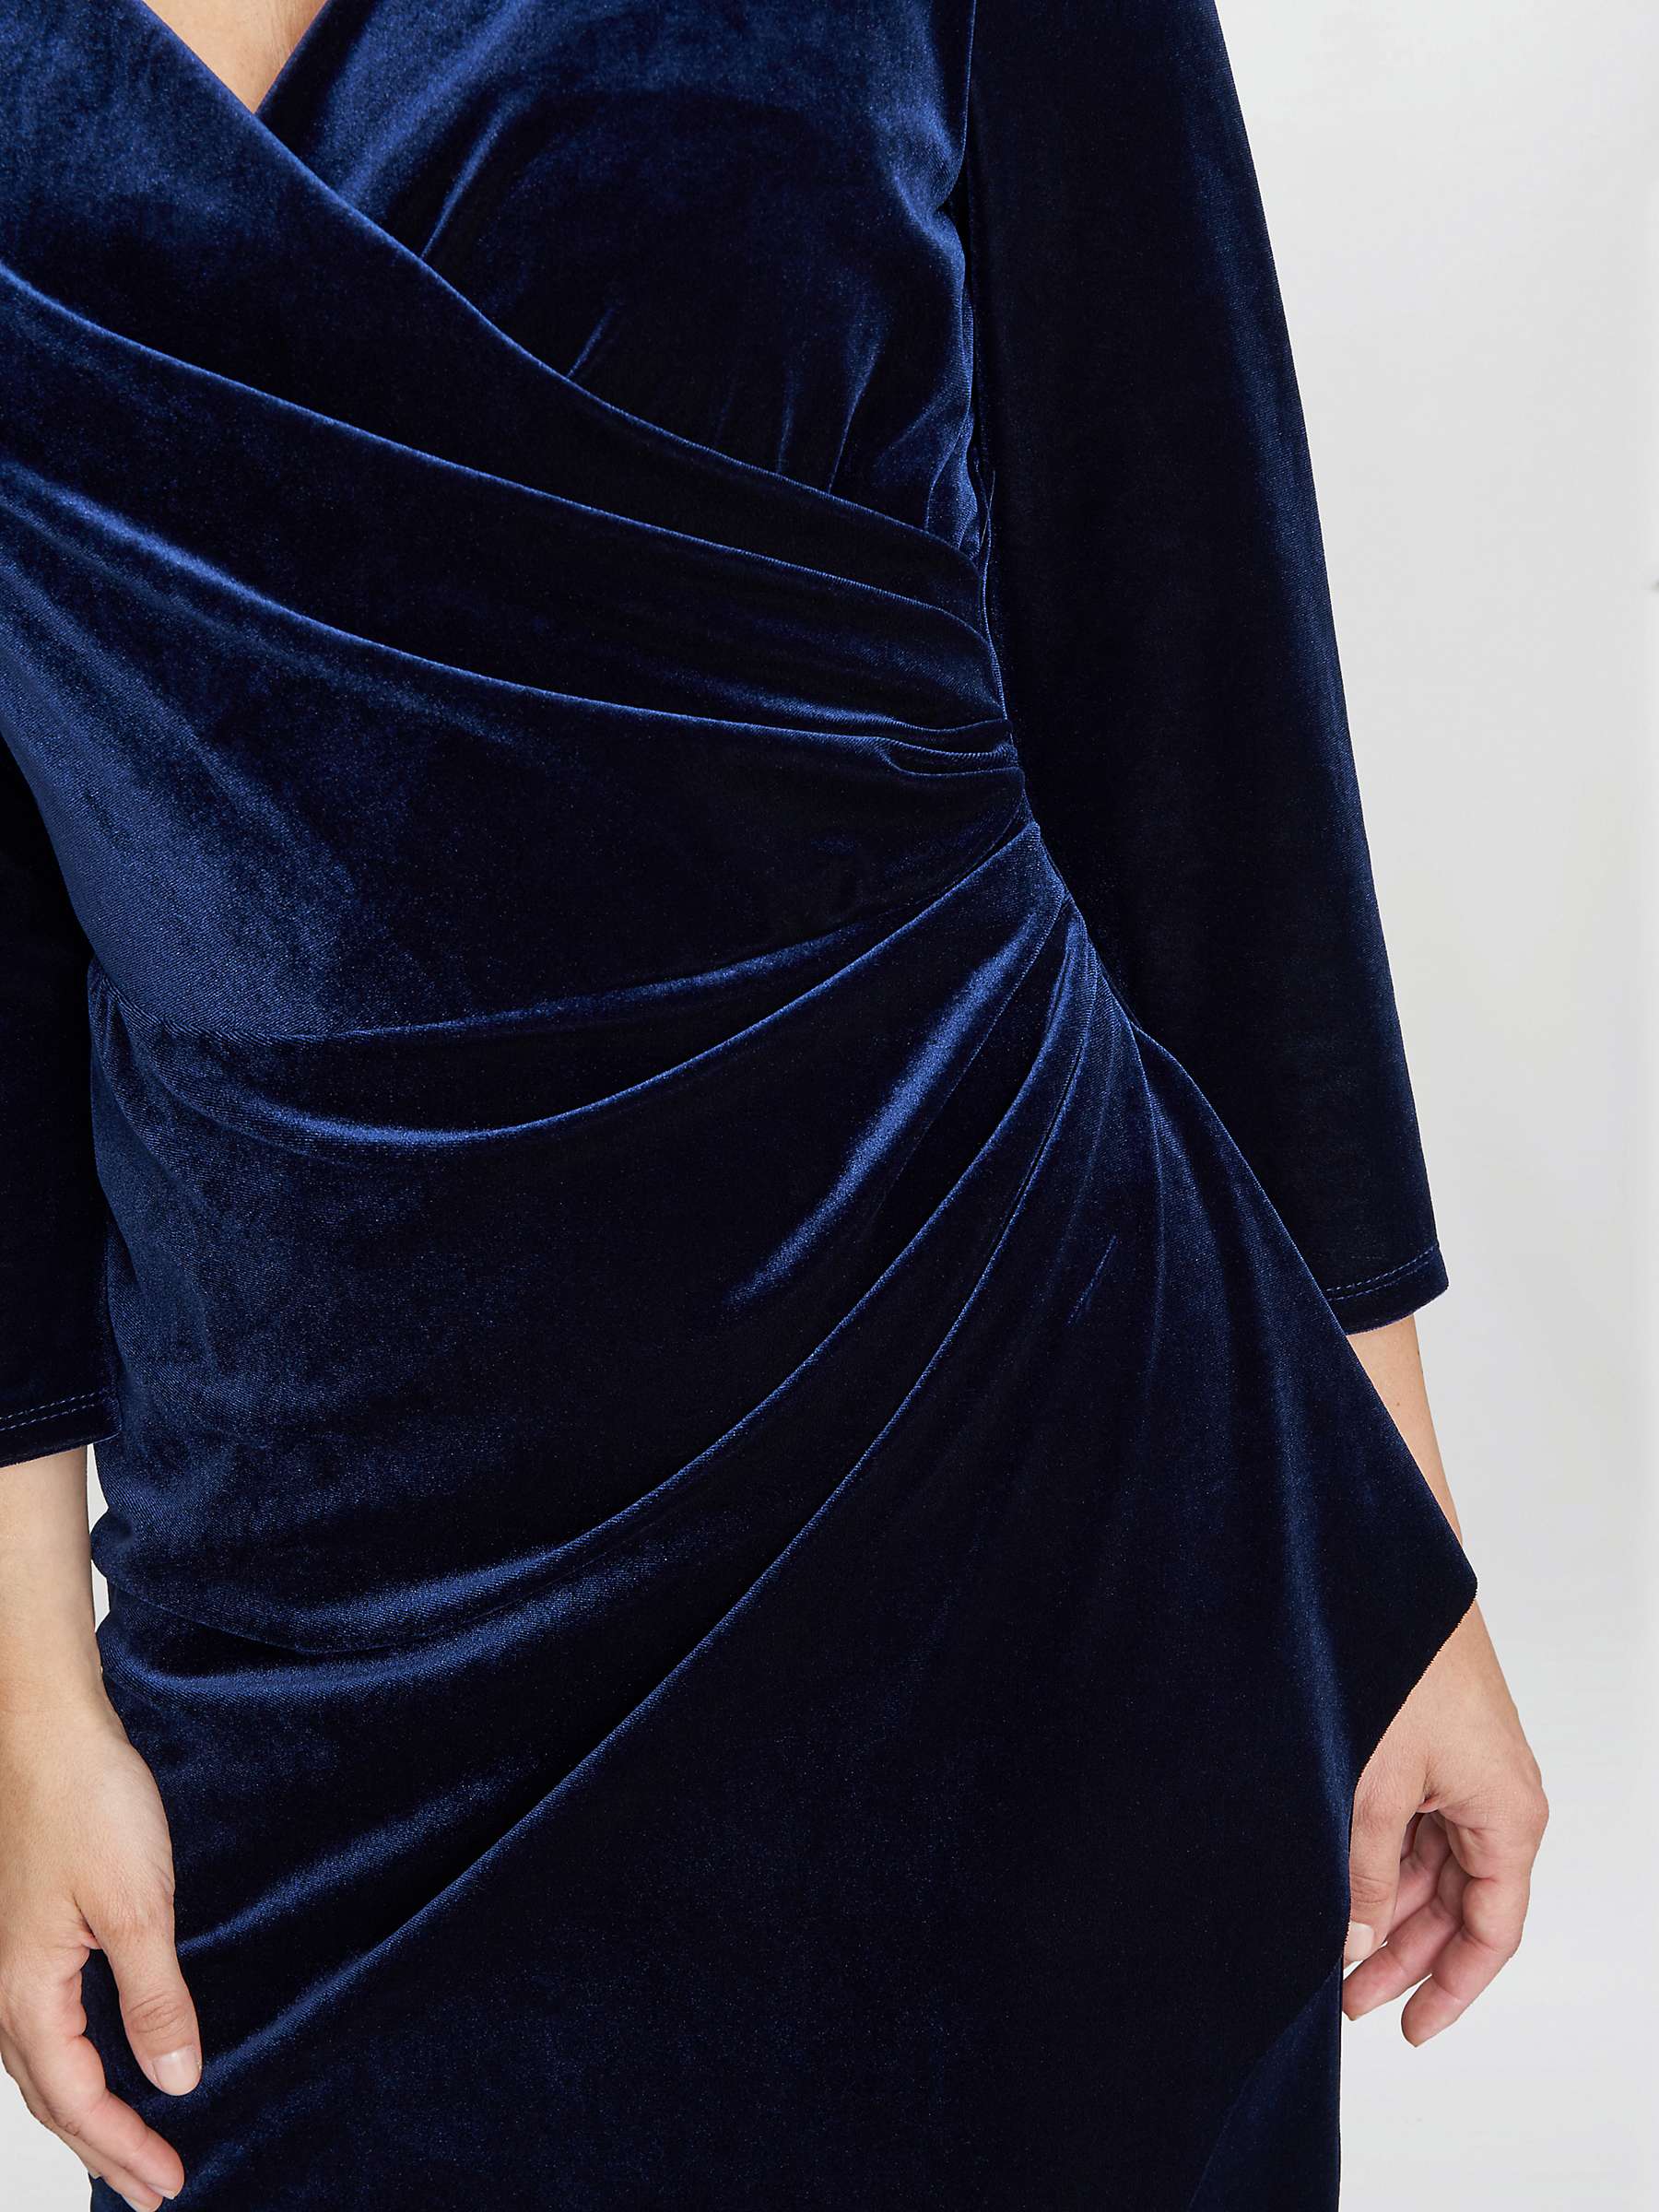 Buy Gina Bacconi Zoe Velvet Wrap Dress Online at johnlewis.com